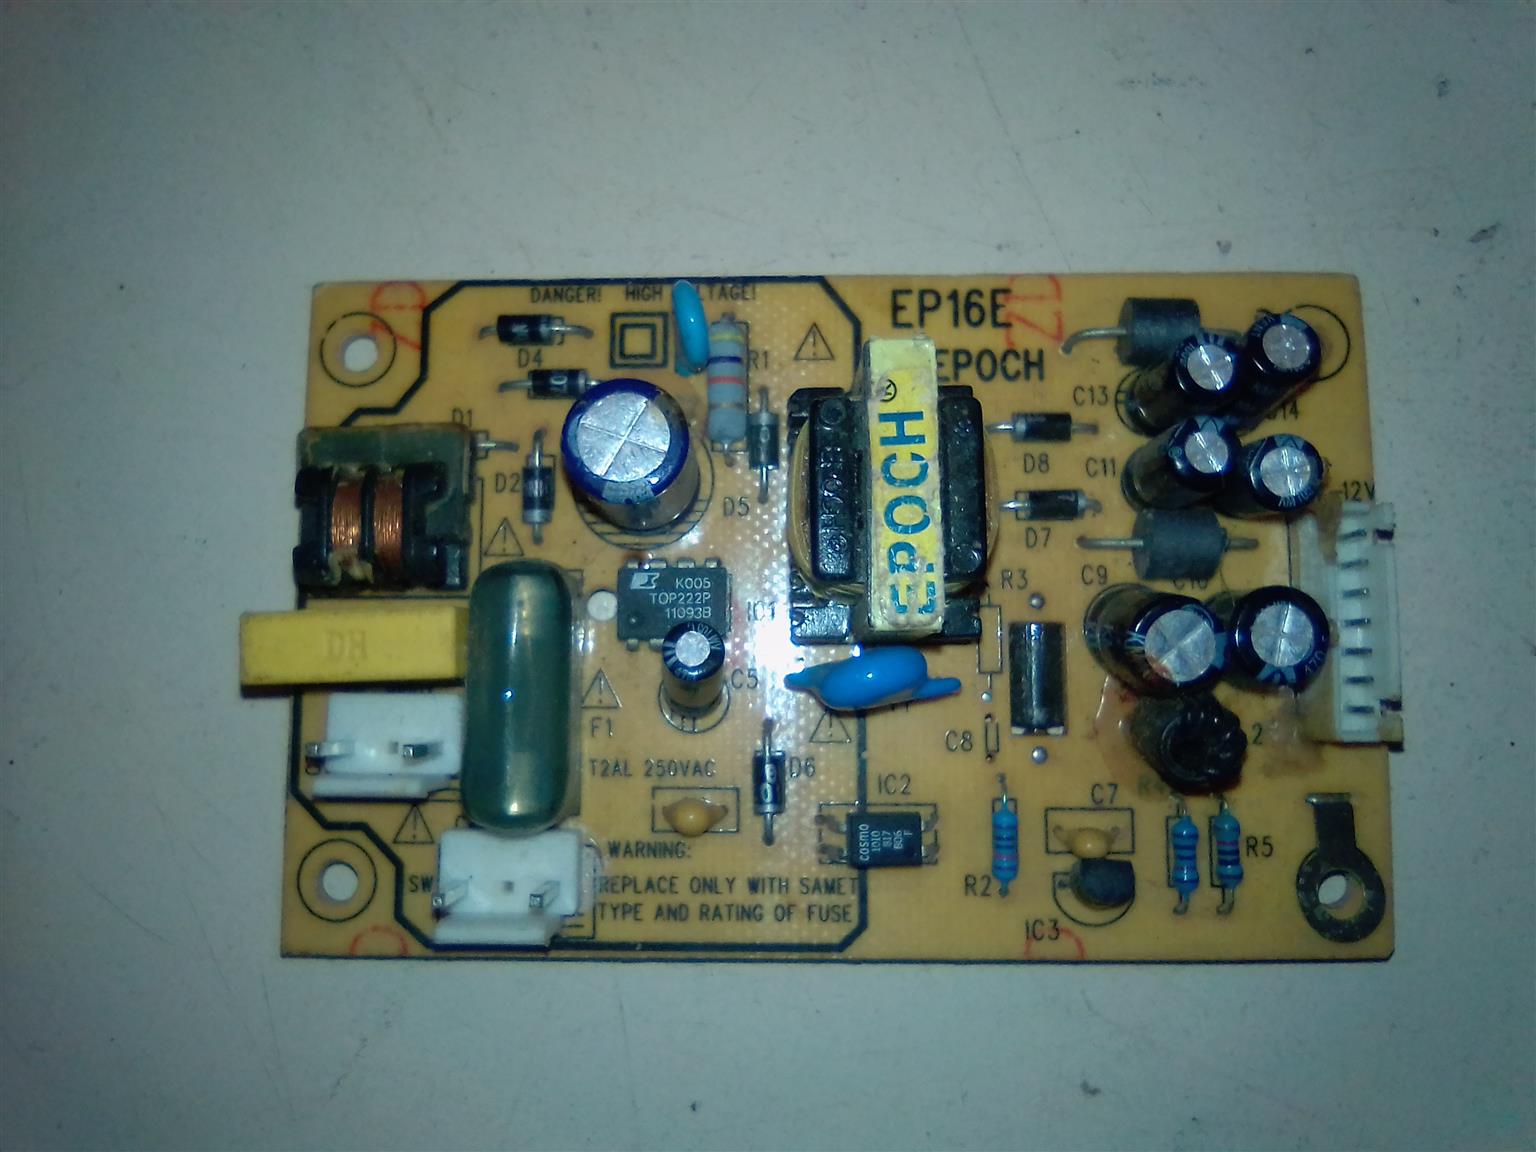 An EP16E EPOCH dvd player power supply board.